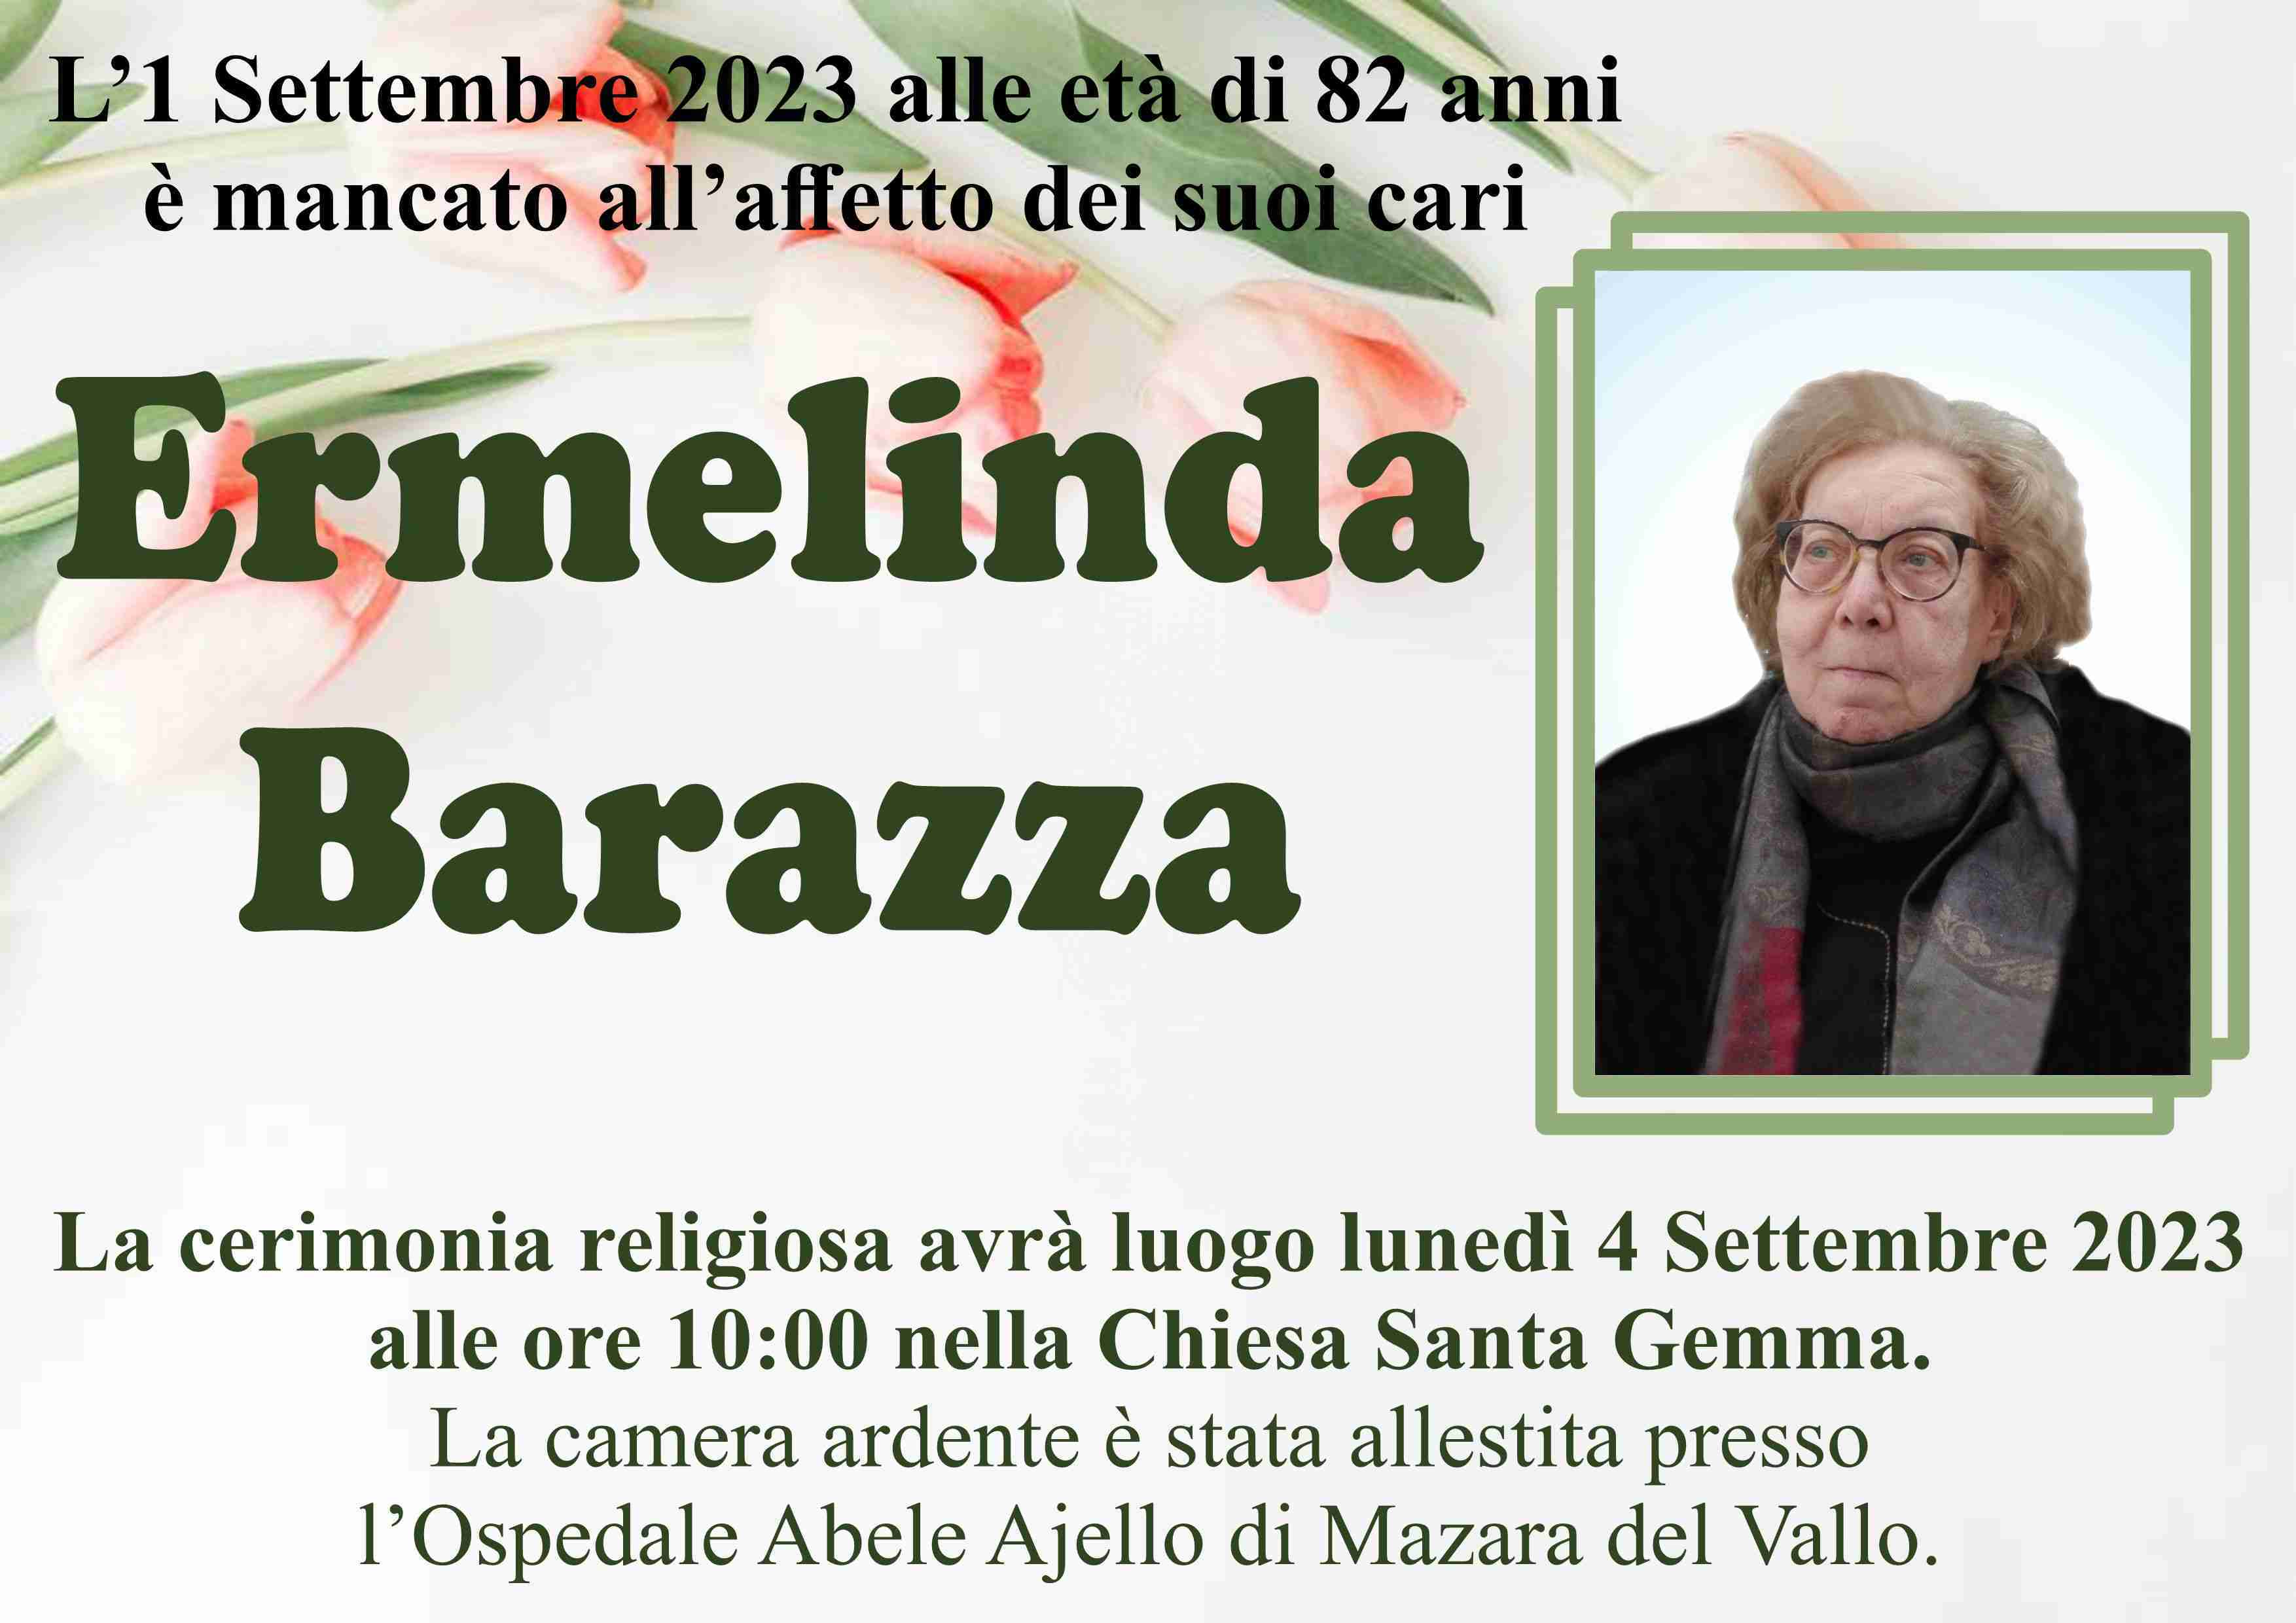 Ermelinda Barazza